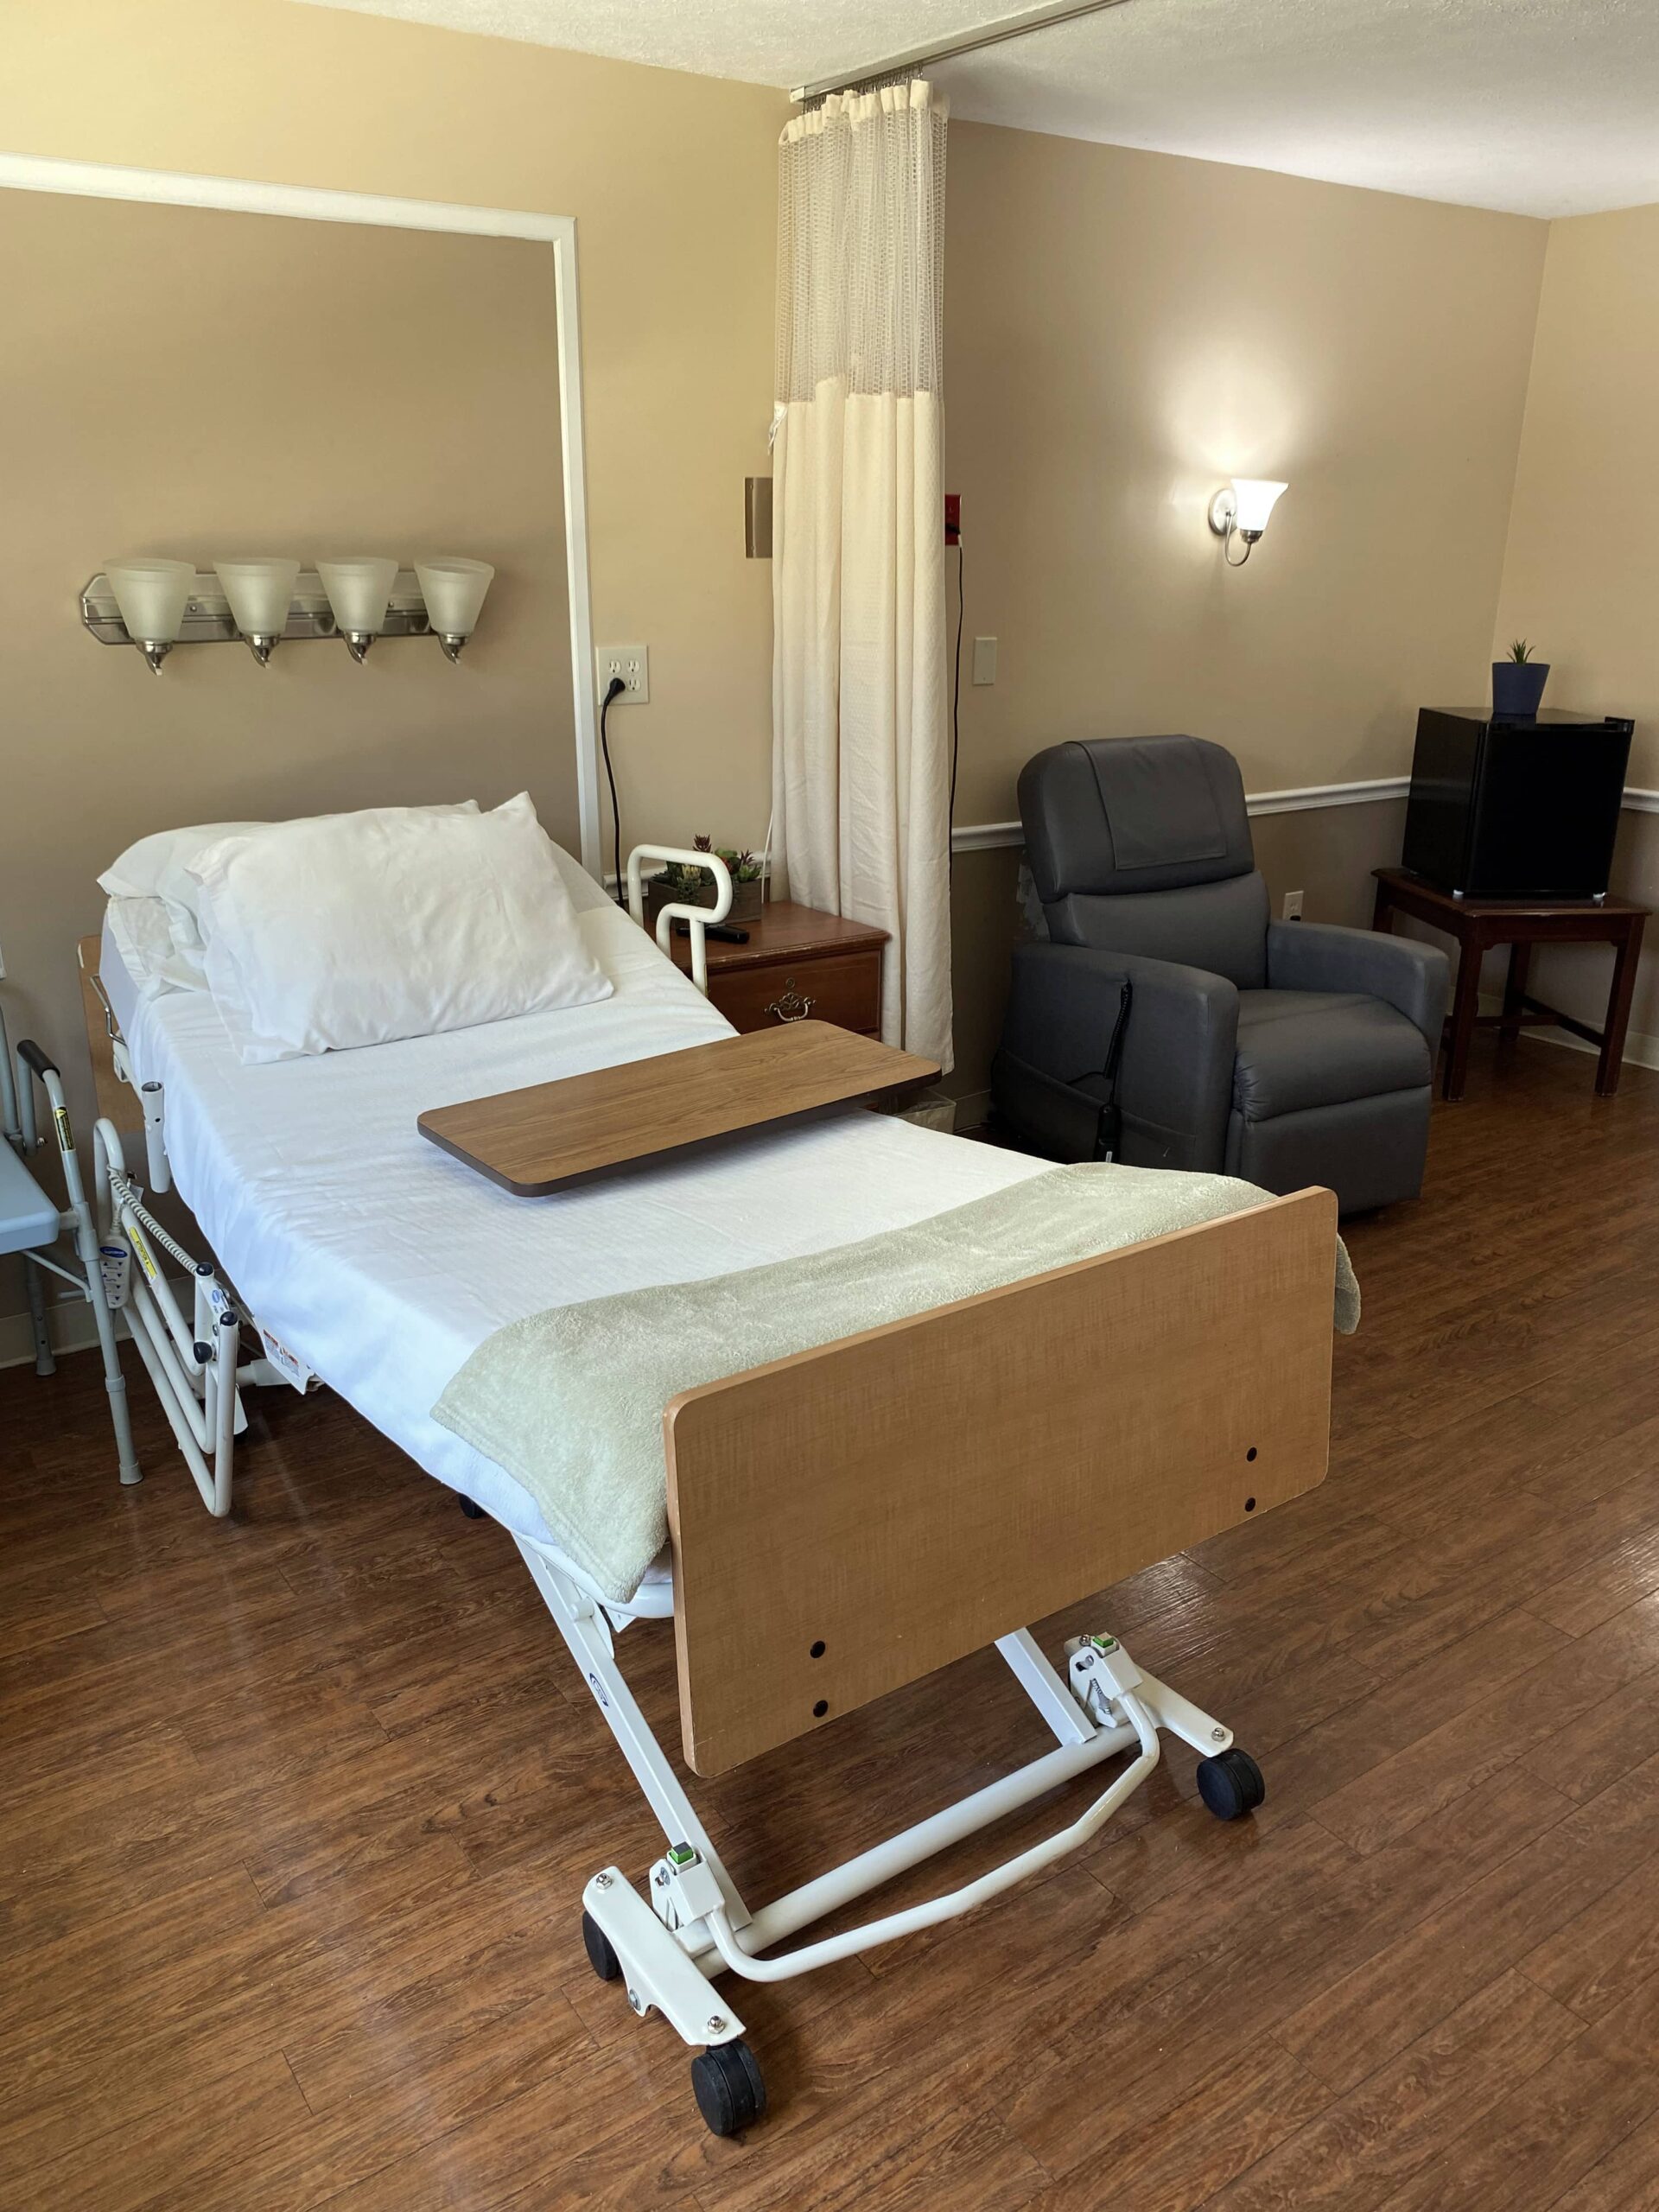 Brickyard Healthcare Brandywine Care Center resident bedroom suite